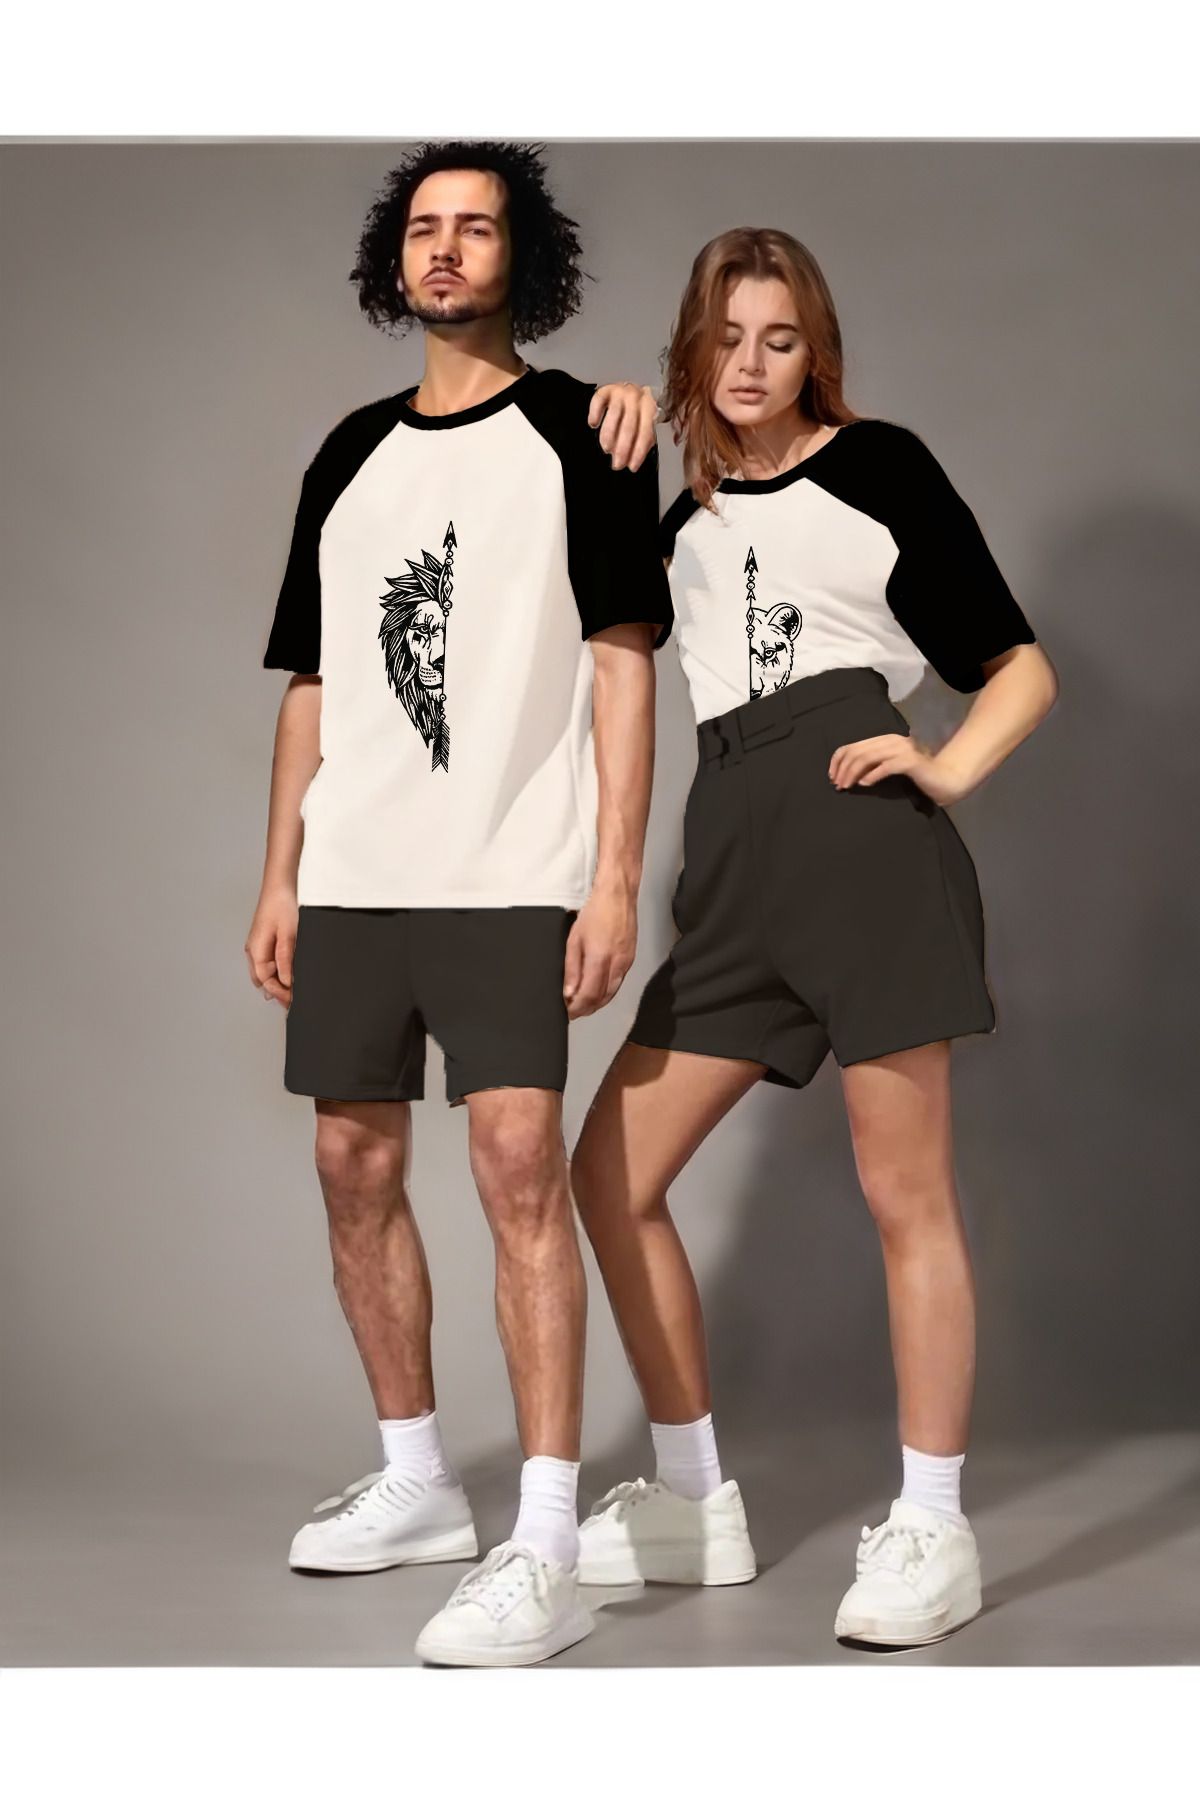 EVIus Yeni Sezon Sevgili Kombini Erkek Aslan Dişi Aslan Oversize Çift Renk T-Shirt